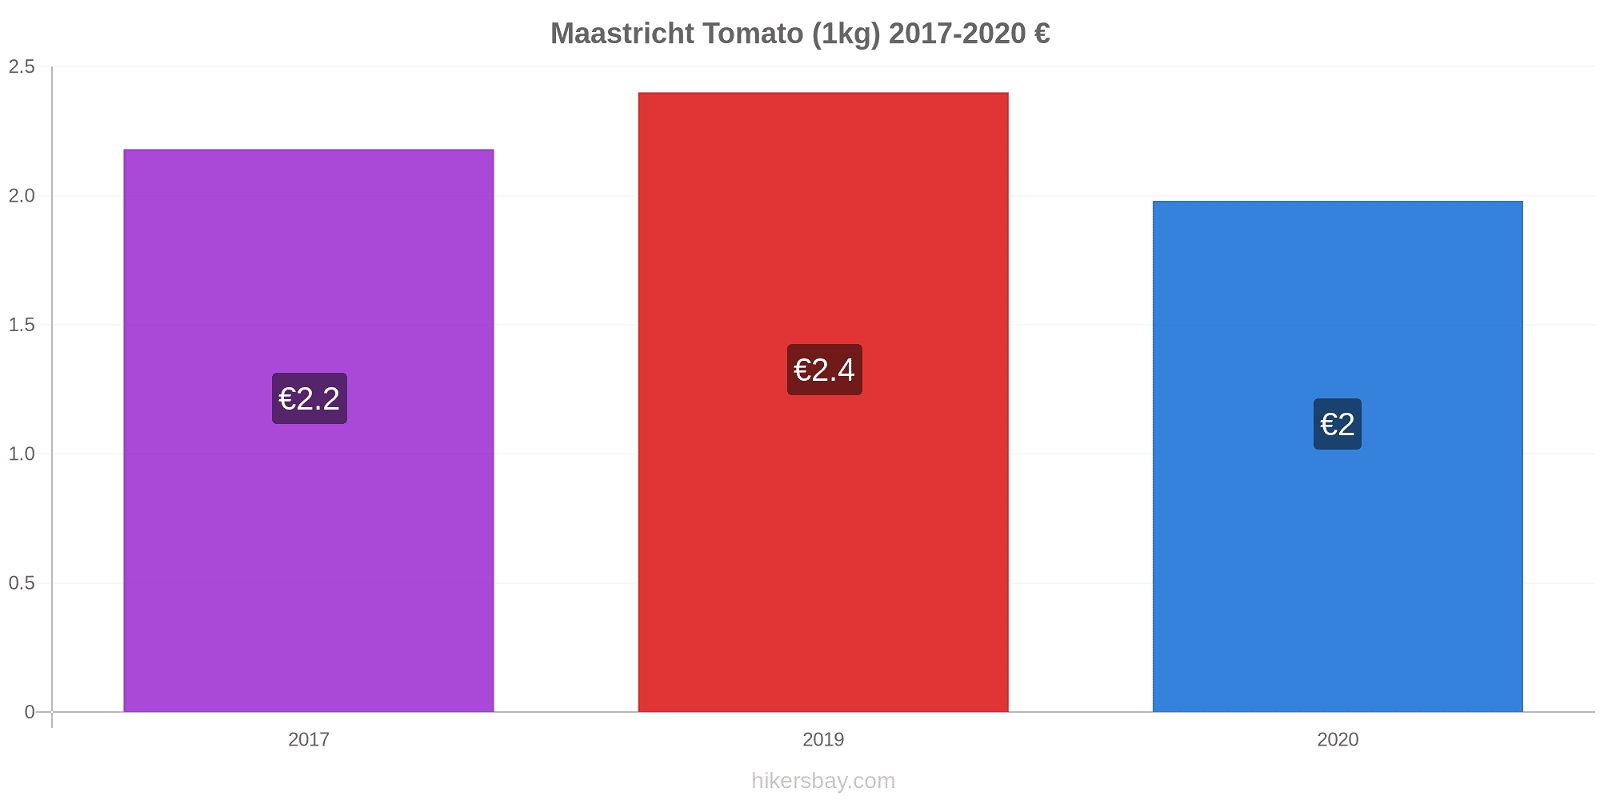 Maastricht price changes Tomato (1kg) hikersbay.com